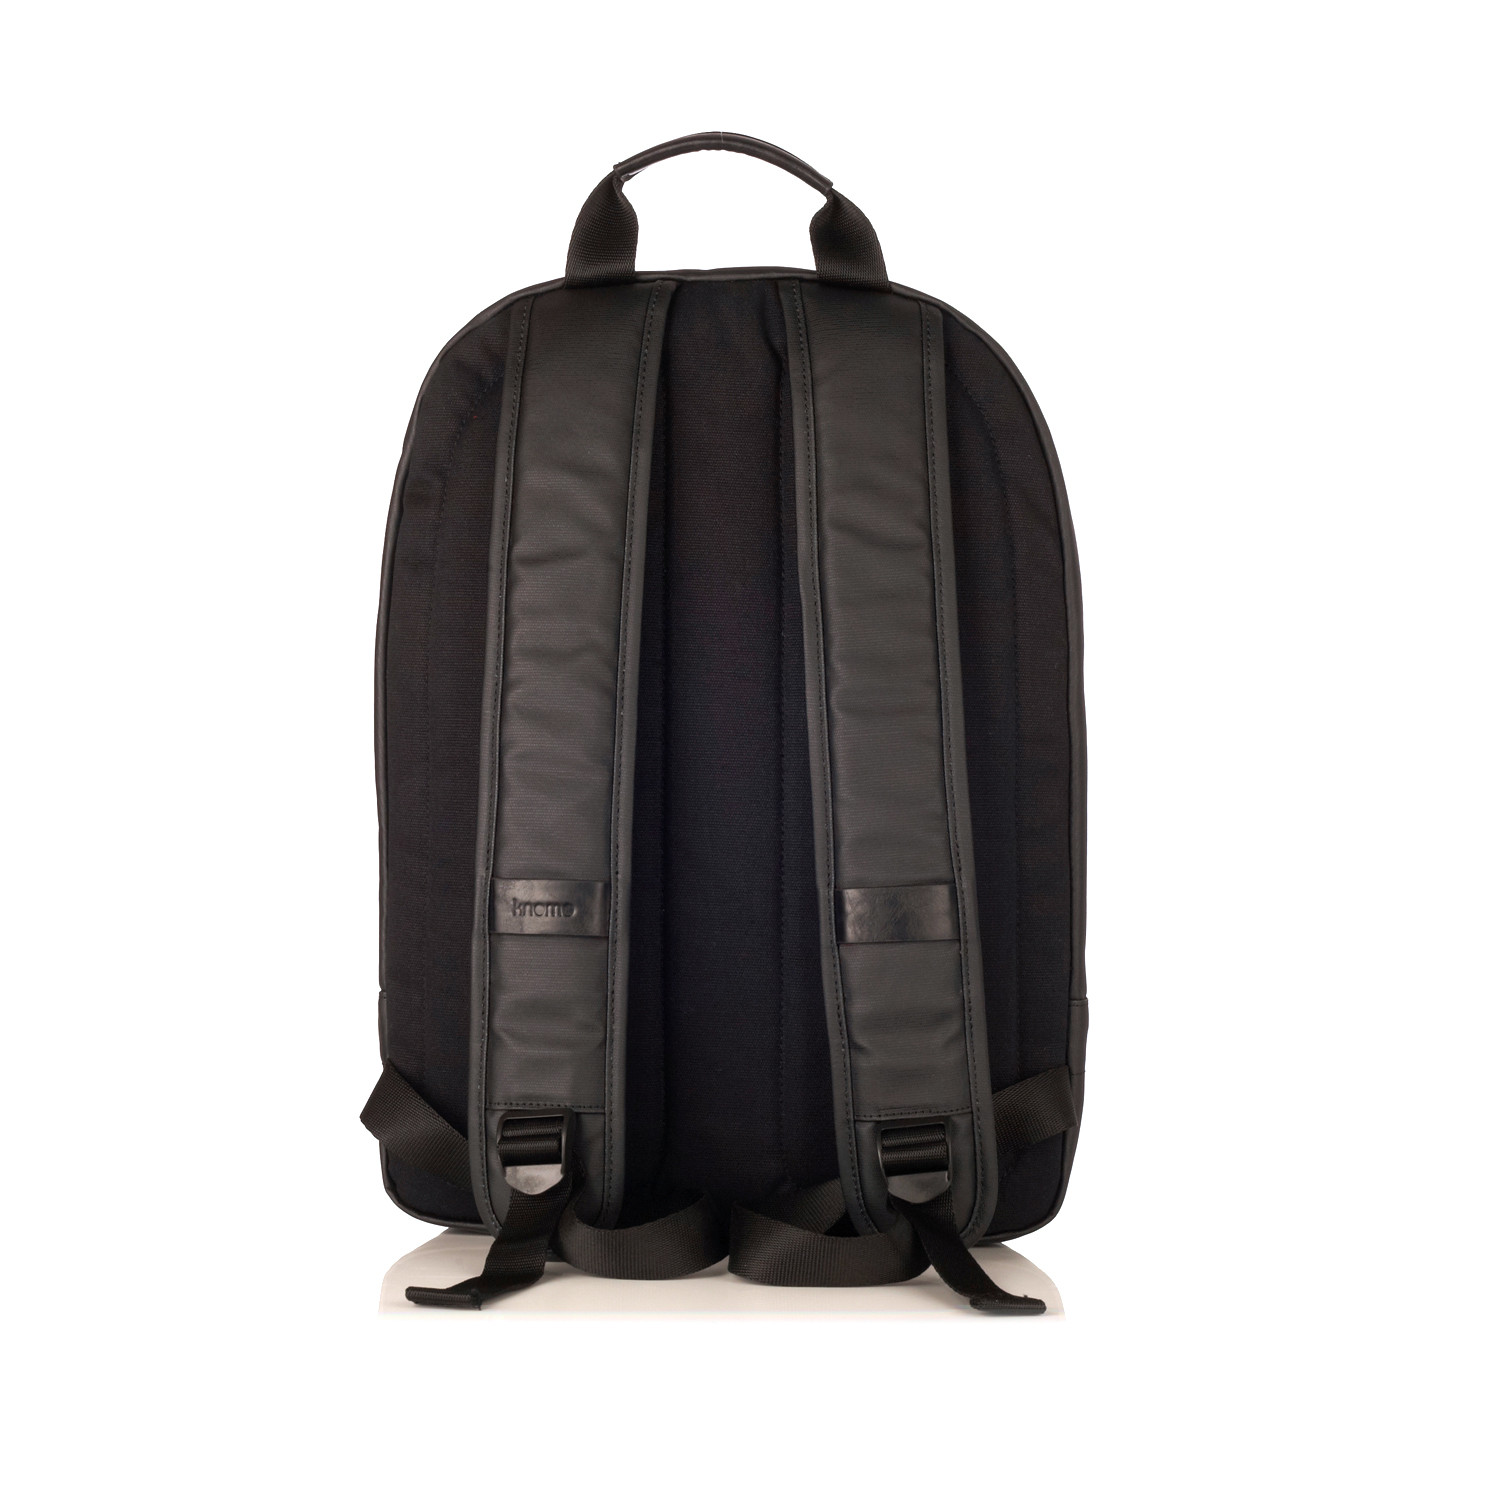 FARGO Backpack Fits 15